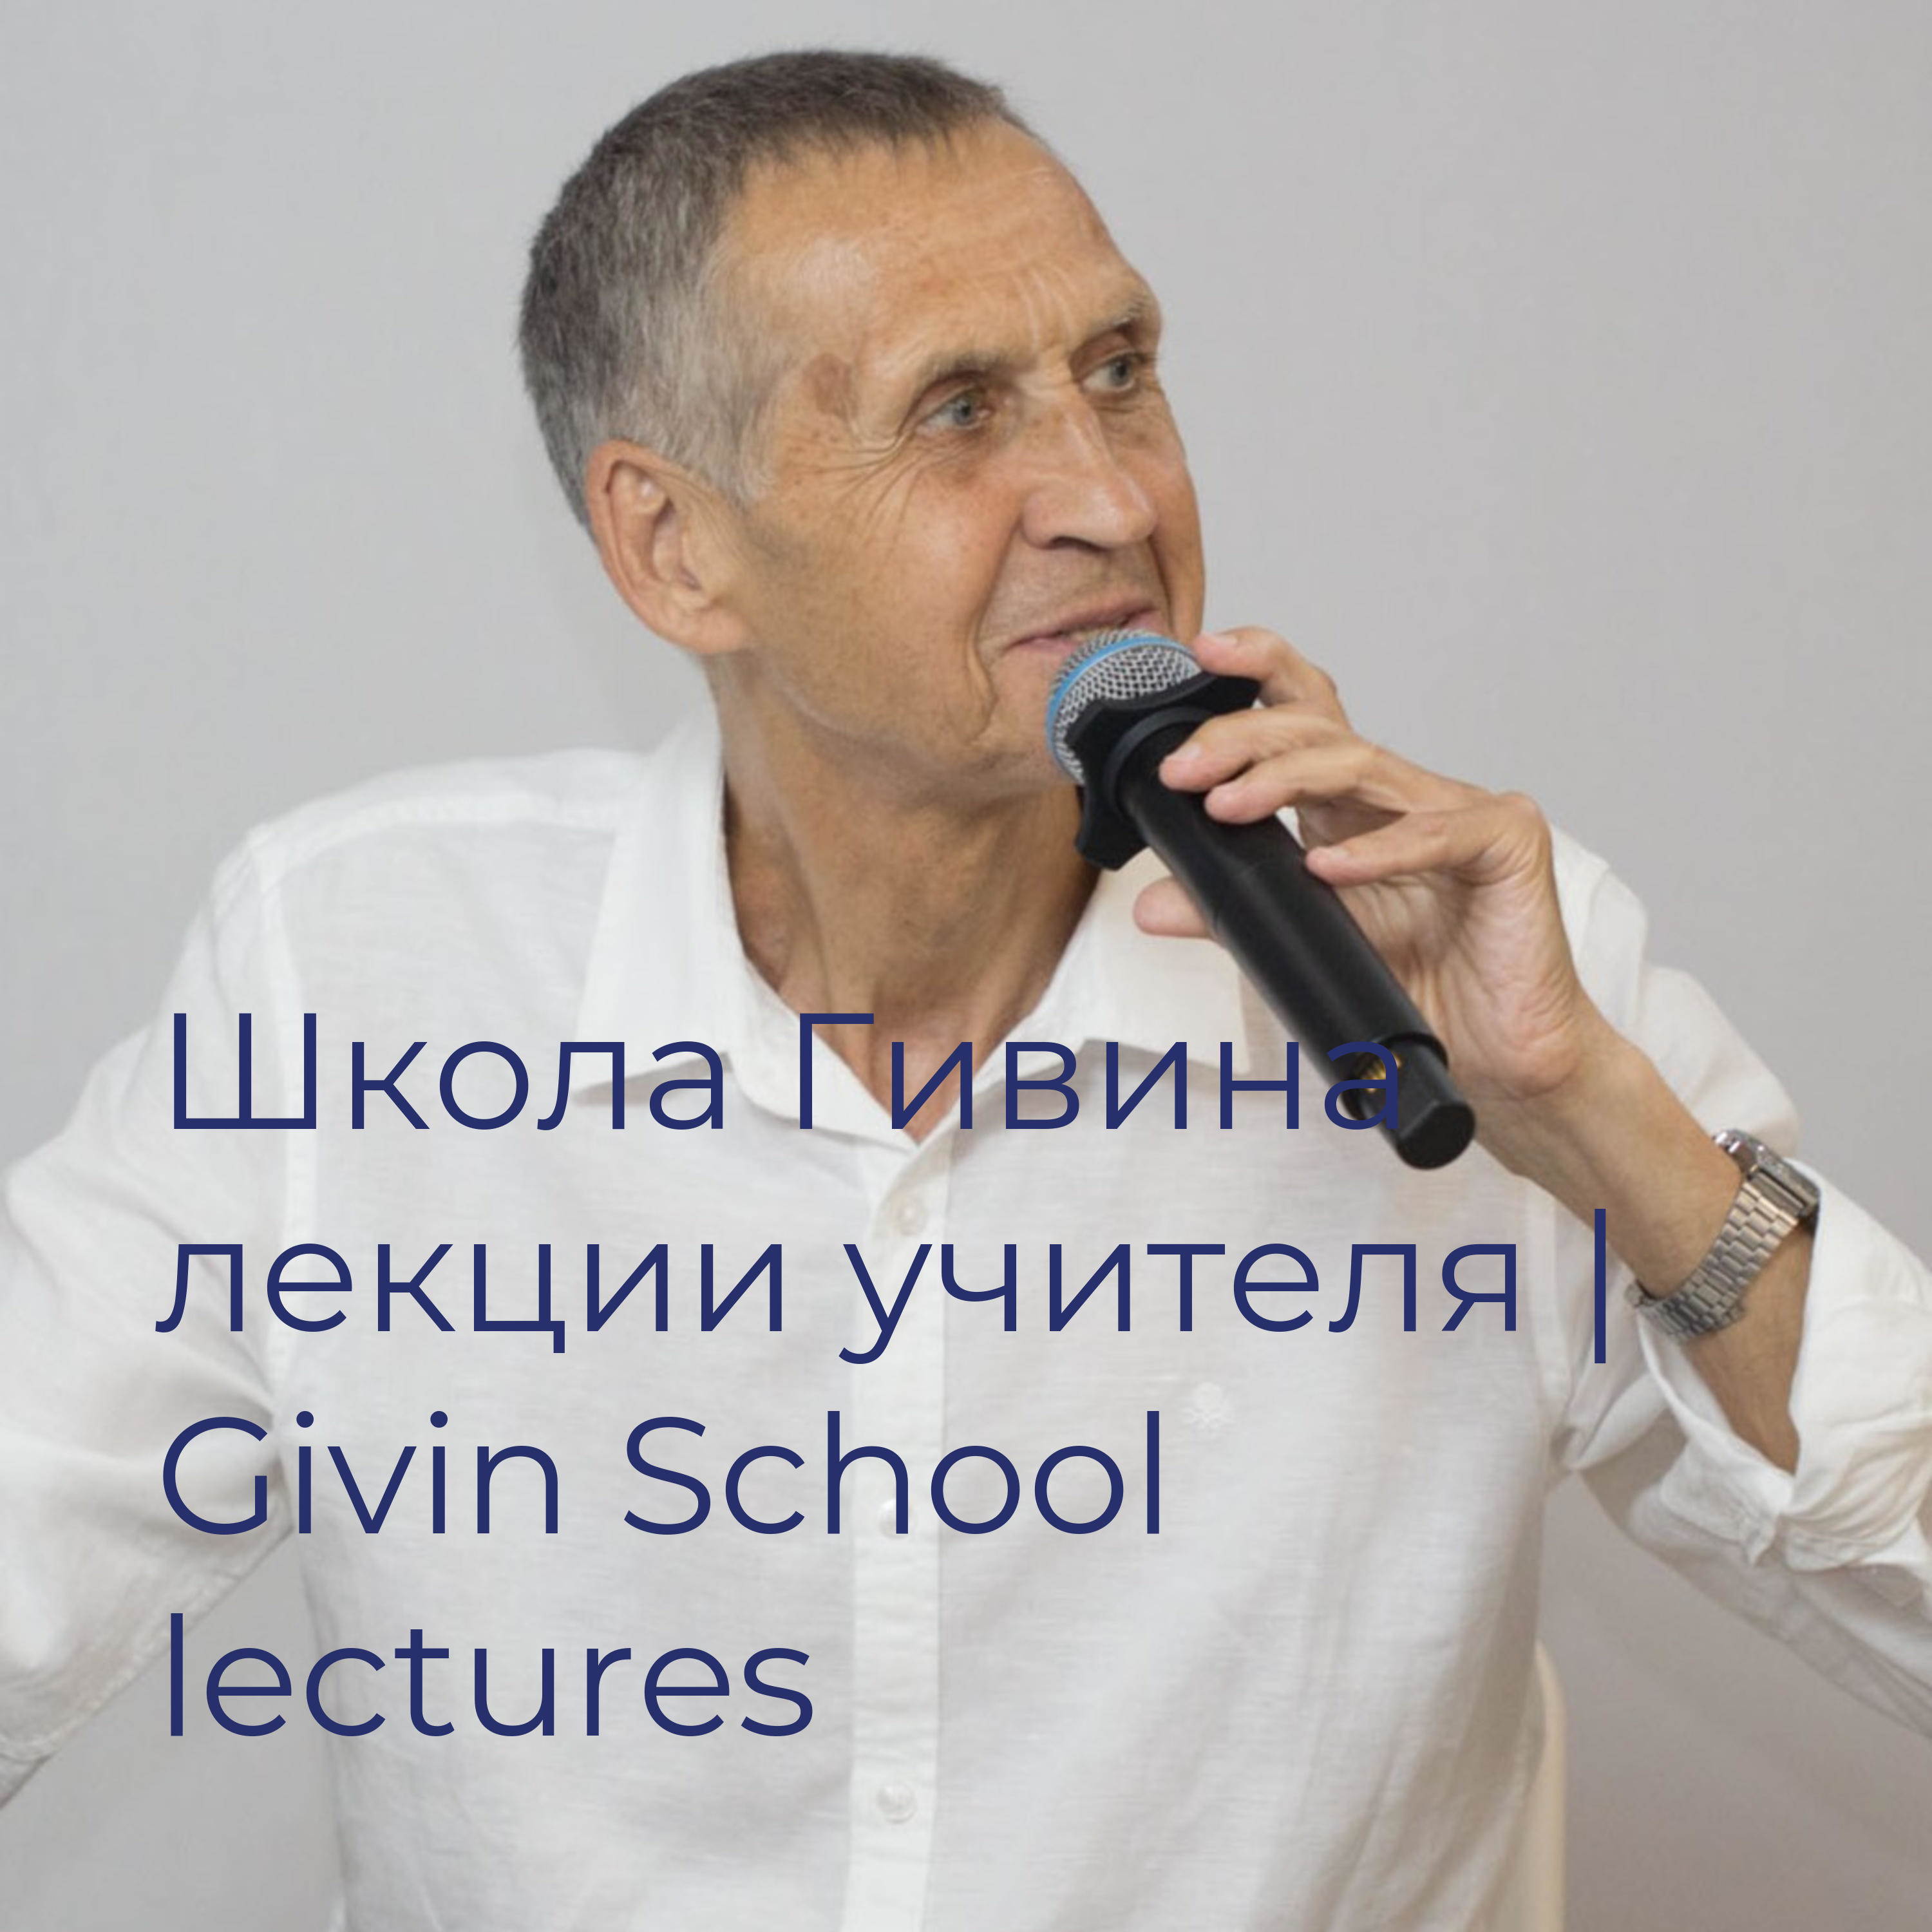 Школа Гивина лекции учителя | Givin School lectures